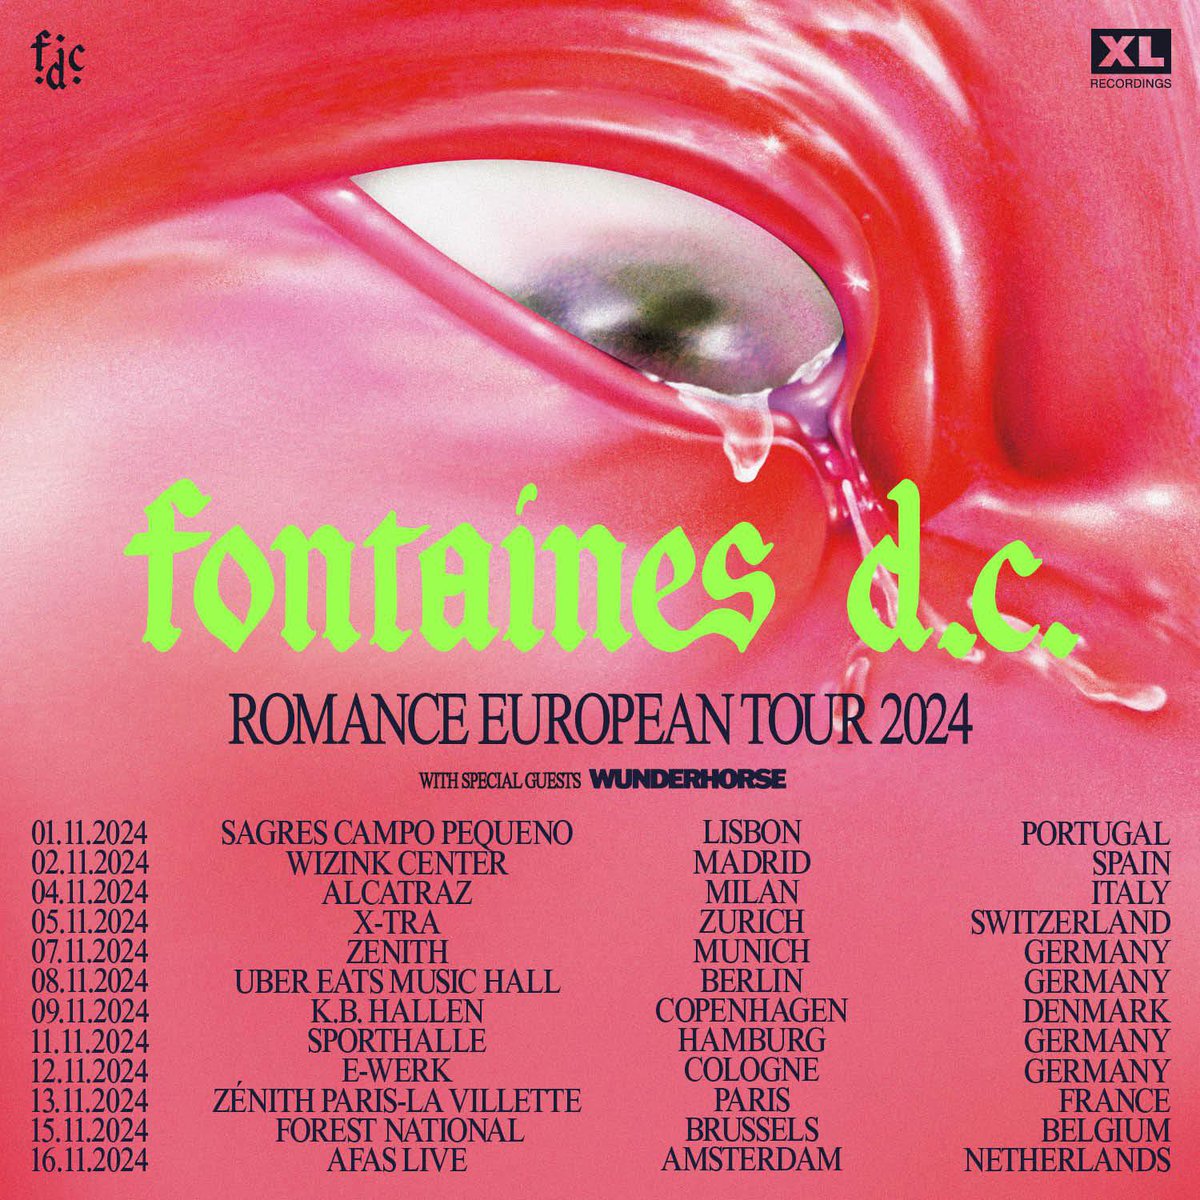 ROMANCE European Tour on sale Friday 3 May, 9am BST/10am CET.